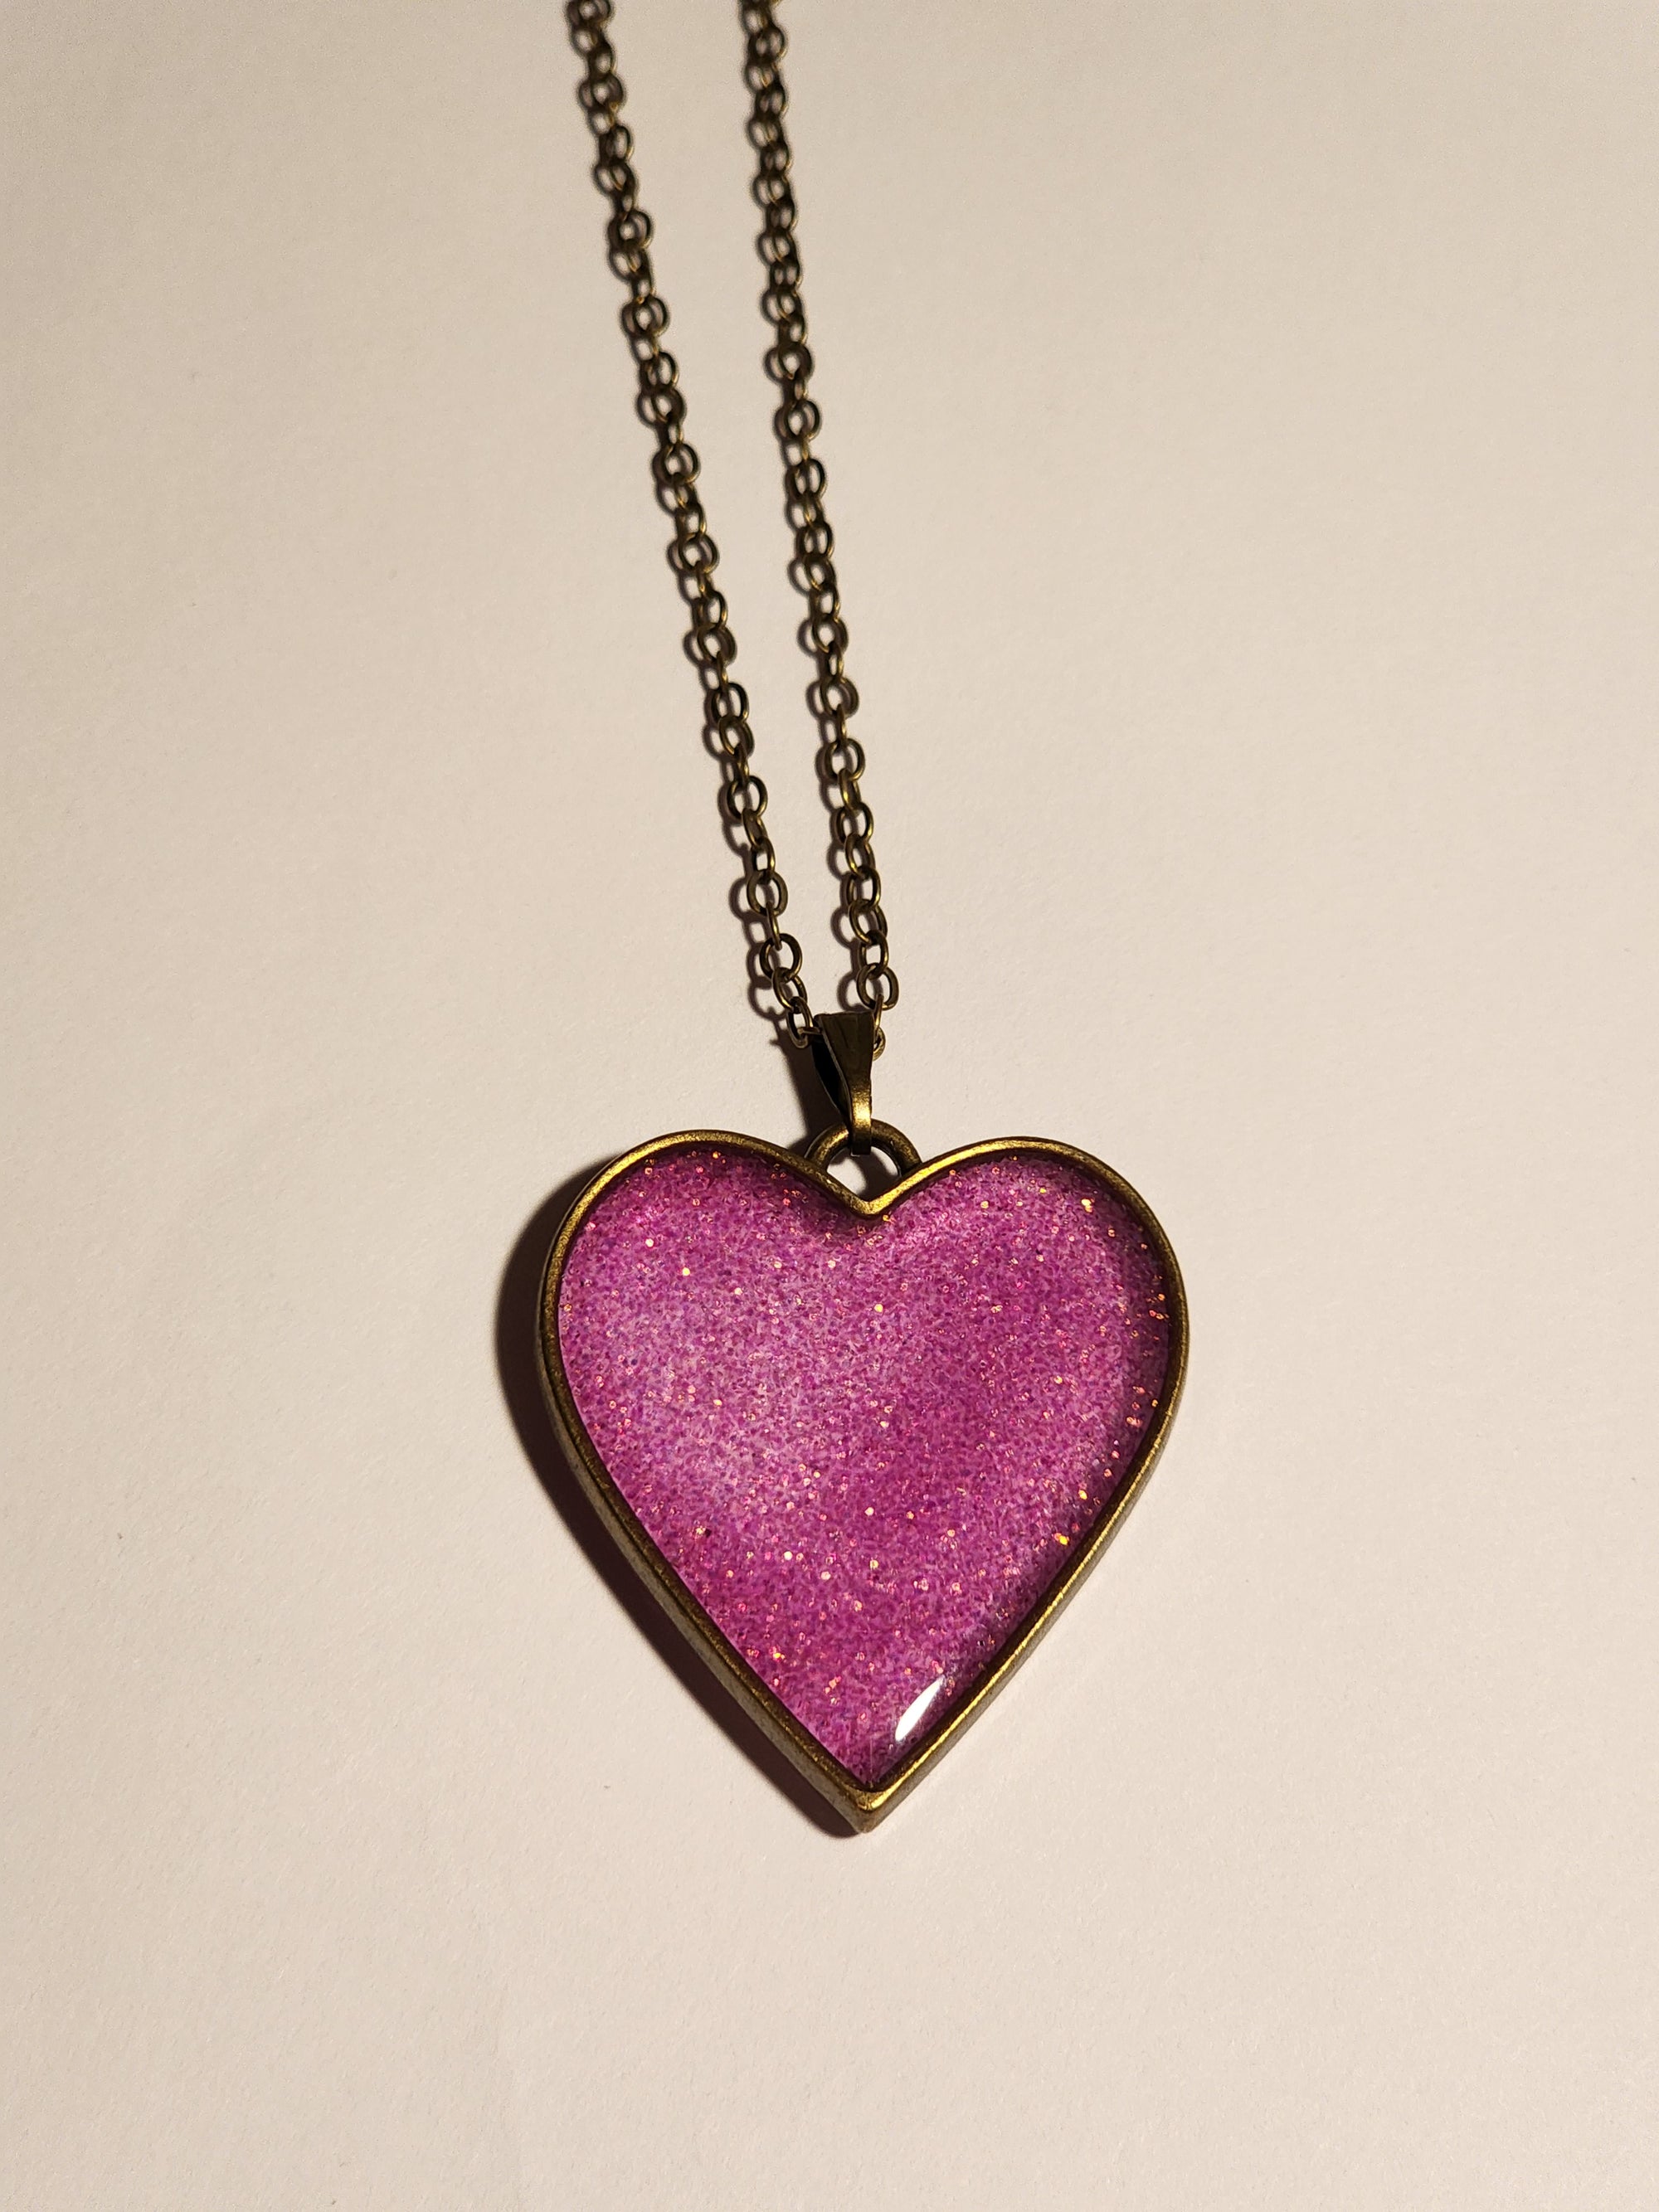 Light purple heart pendant